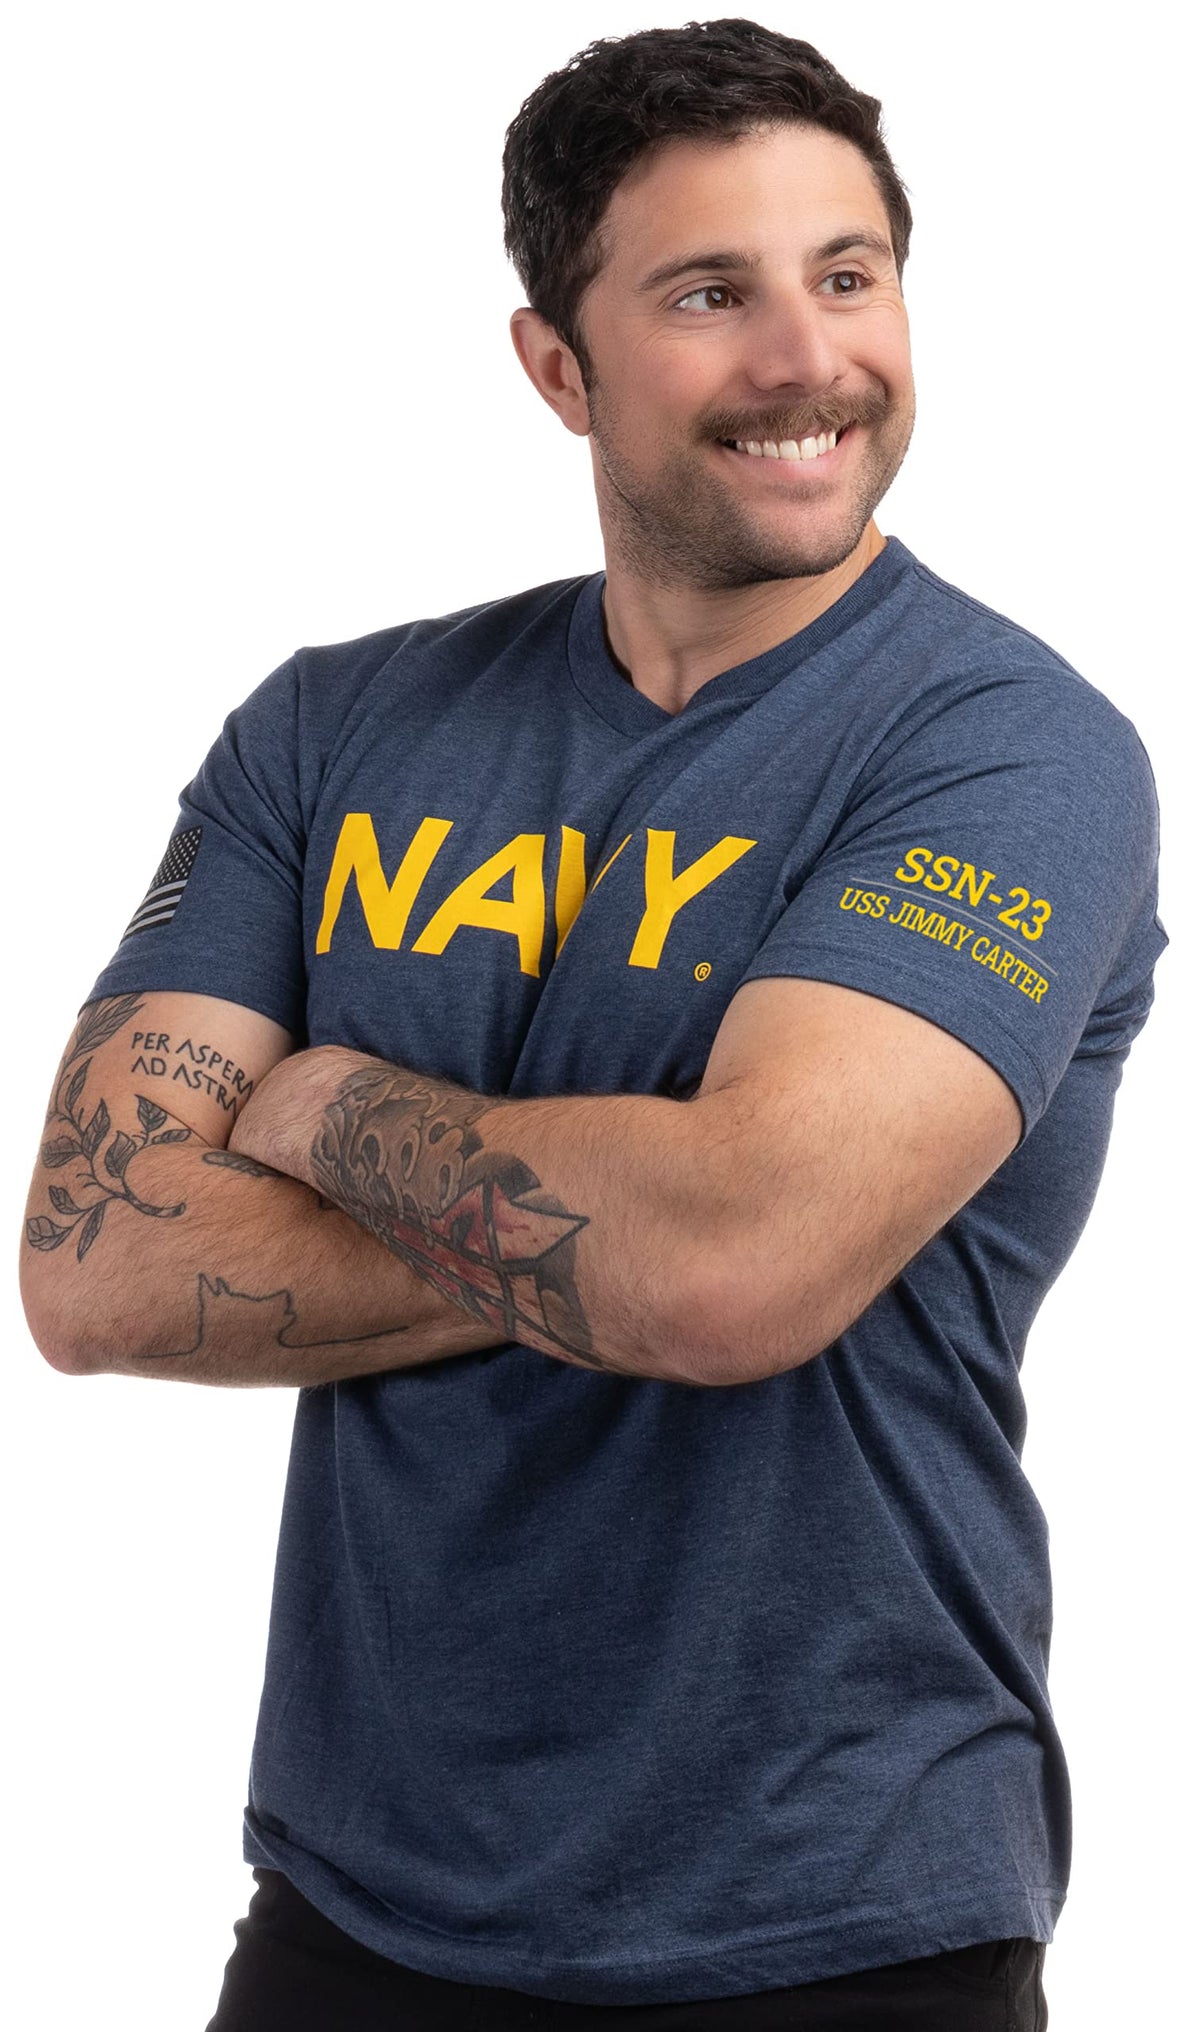 USS Jimmy Carter, SSN-23 | U.S. Navy Sailor Veteran USN United States Naval T-shirt for Men Women